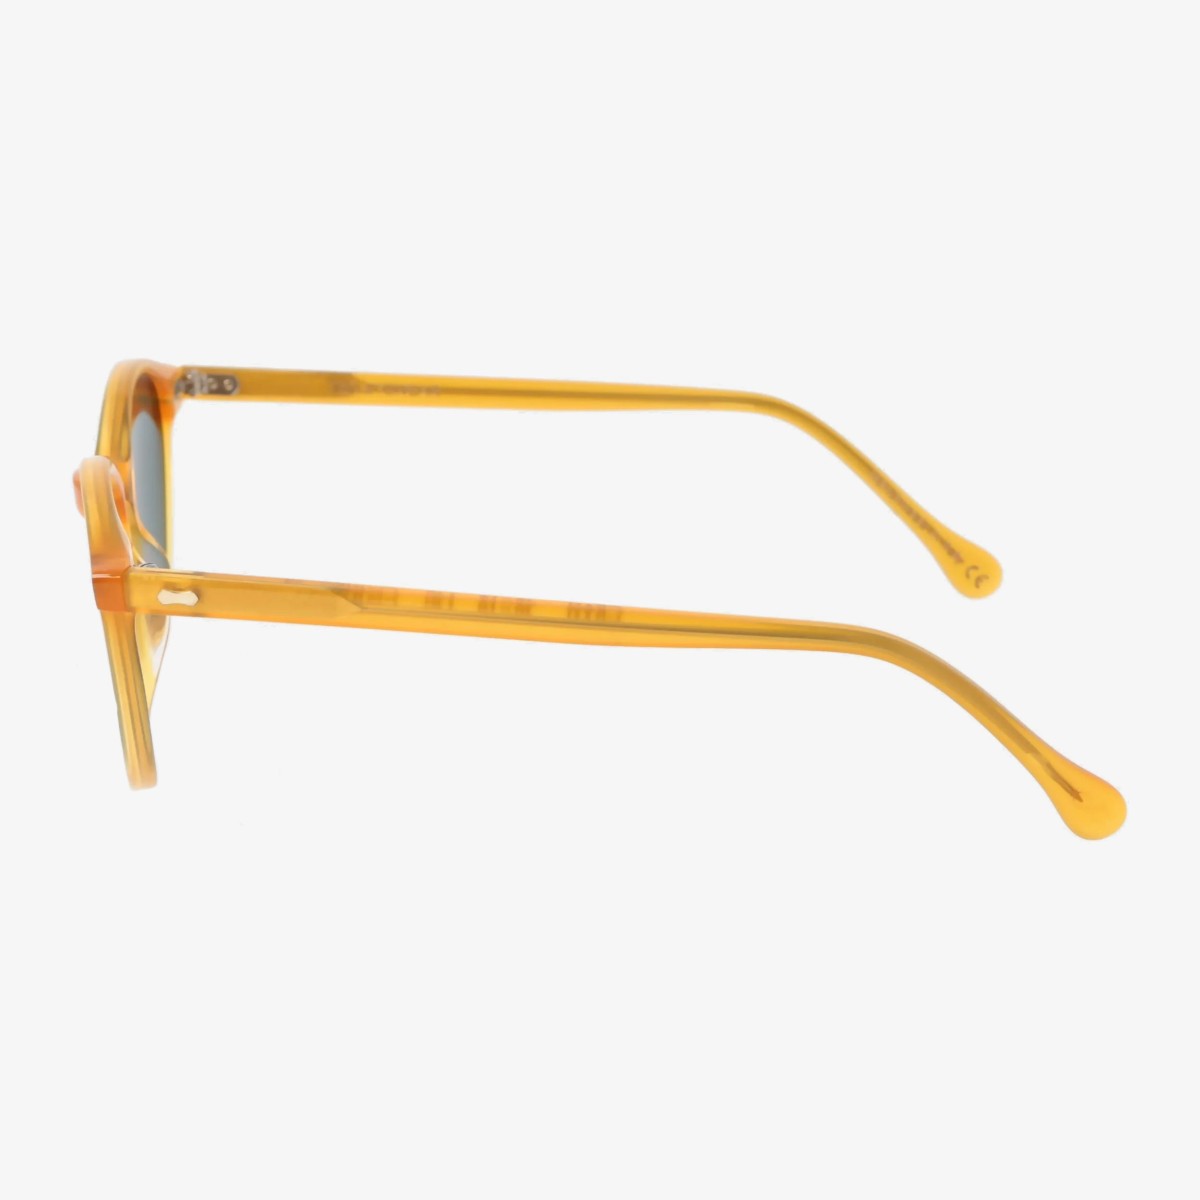 TBD Eyewear Cran yellow frame green lenses sunglasses